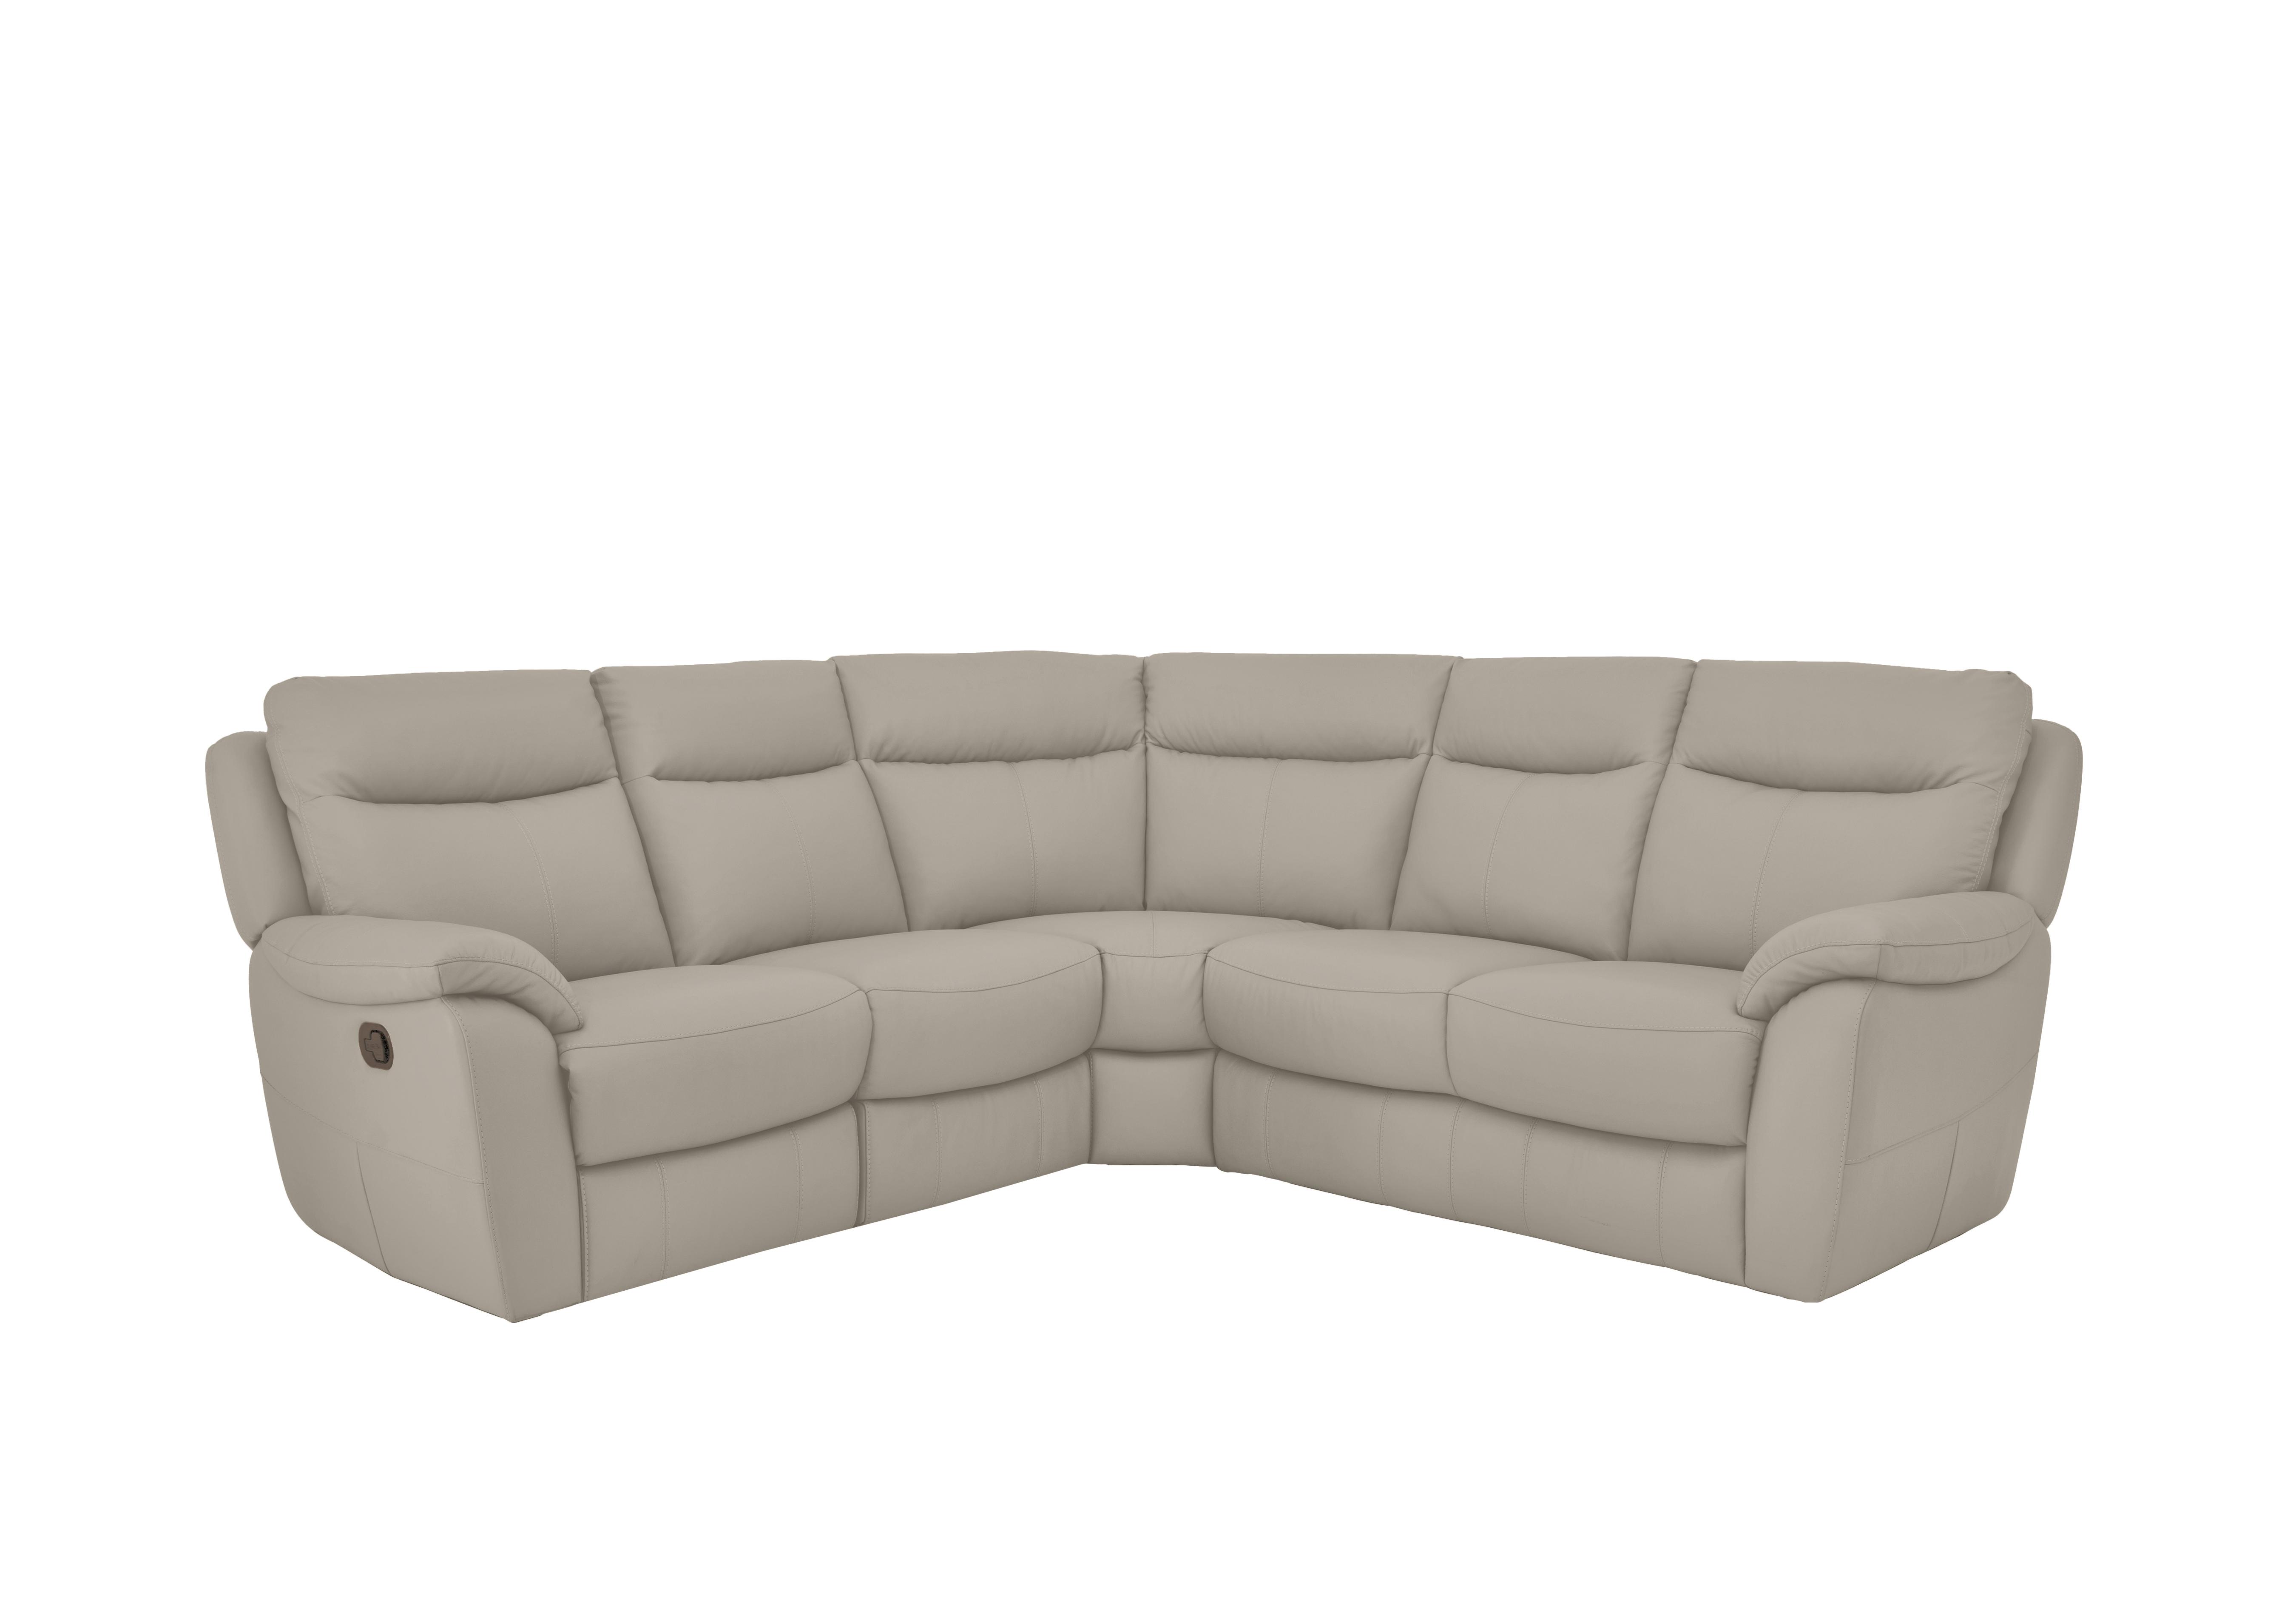 Snug Leather Corner Sofa in Bv-946b Silver Grey on Furniture Village